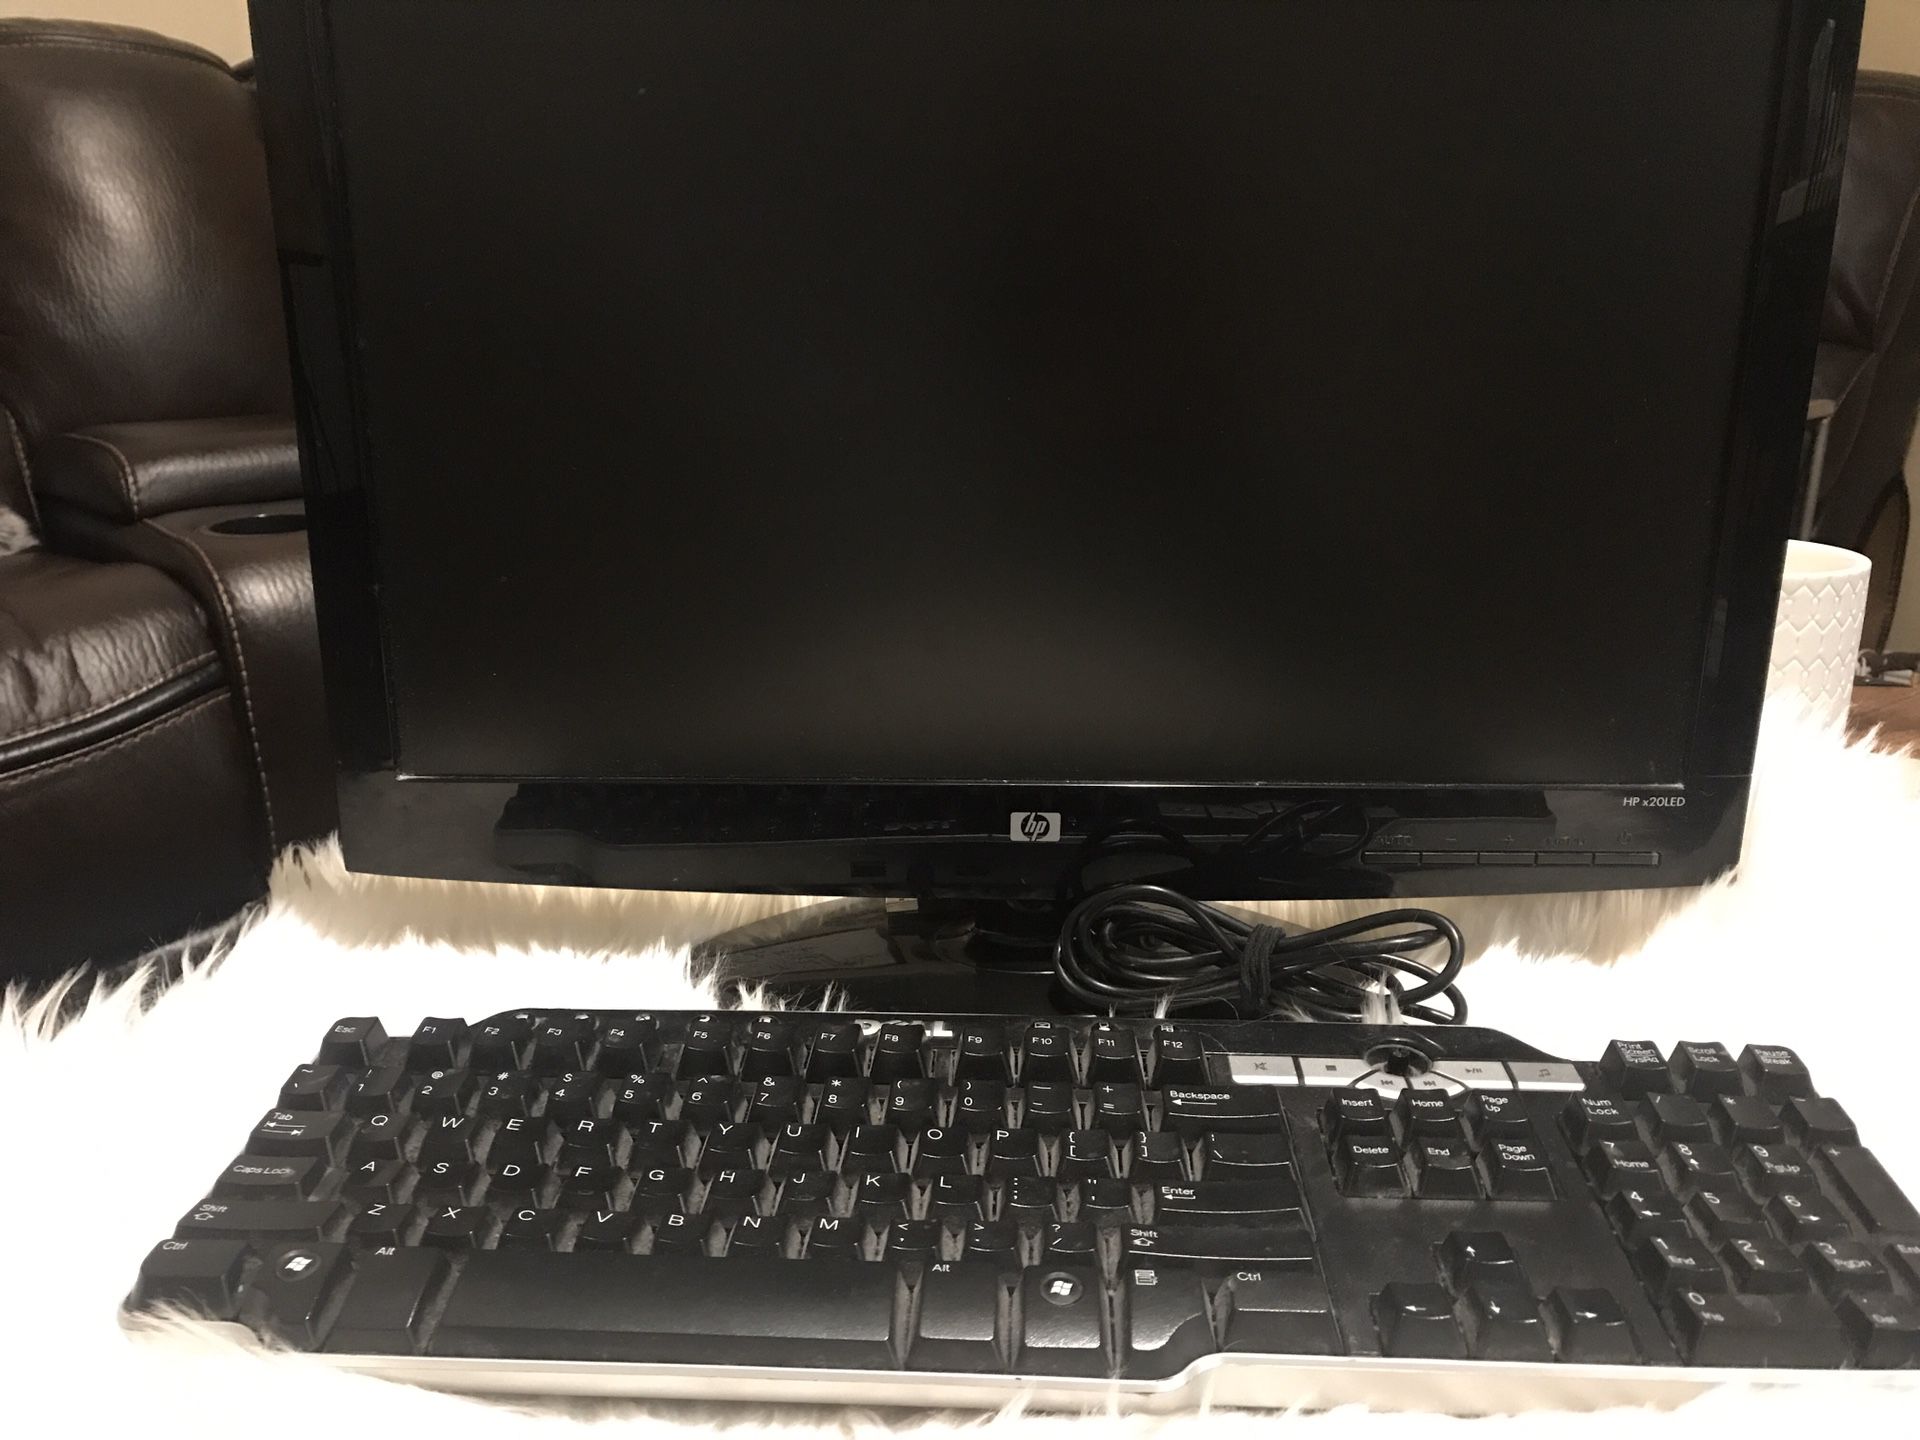 19 inch flat screen computer monitor and keyboard